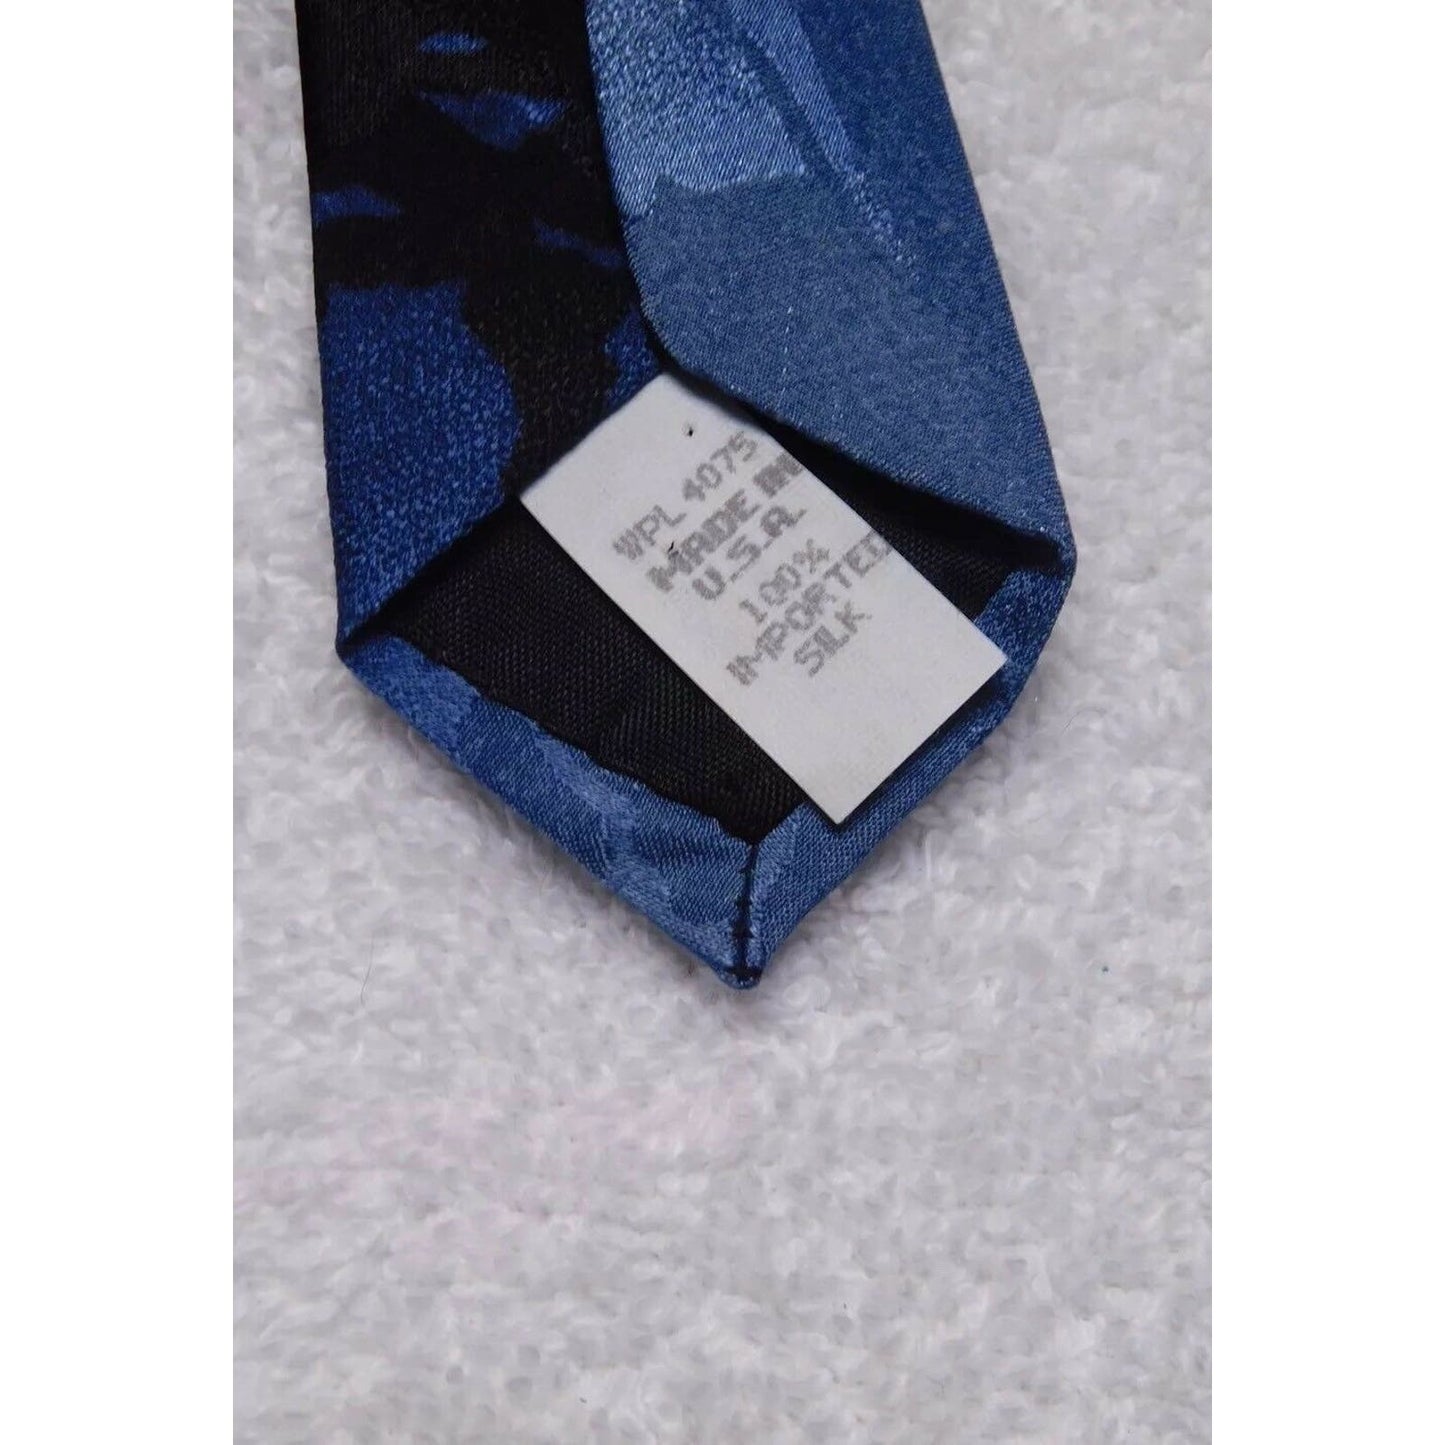 American Film Classics King Kong Vintage Novelty Men's Necktie Tie 100% Silk